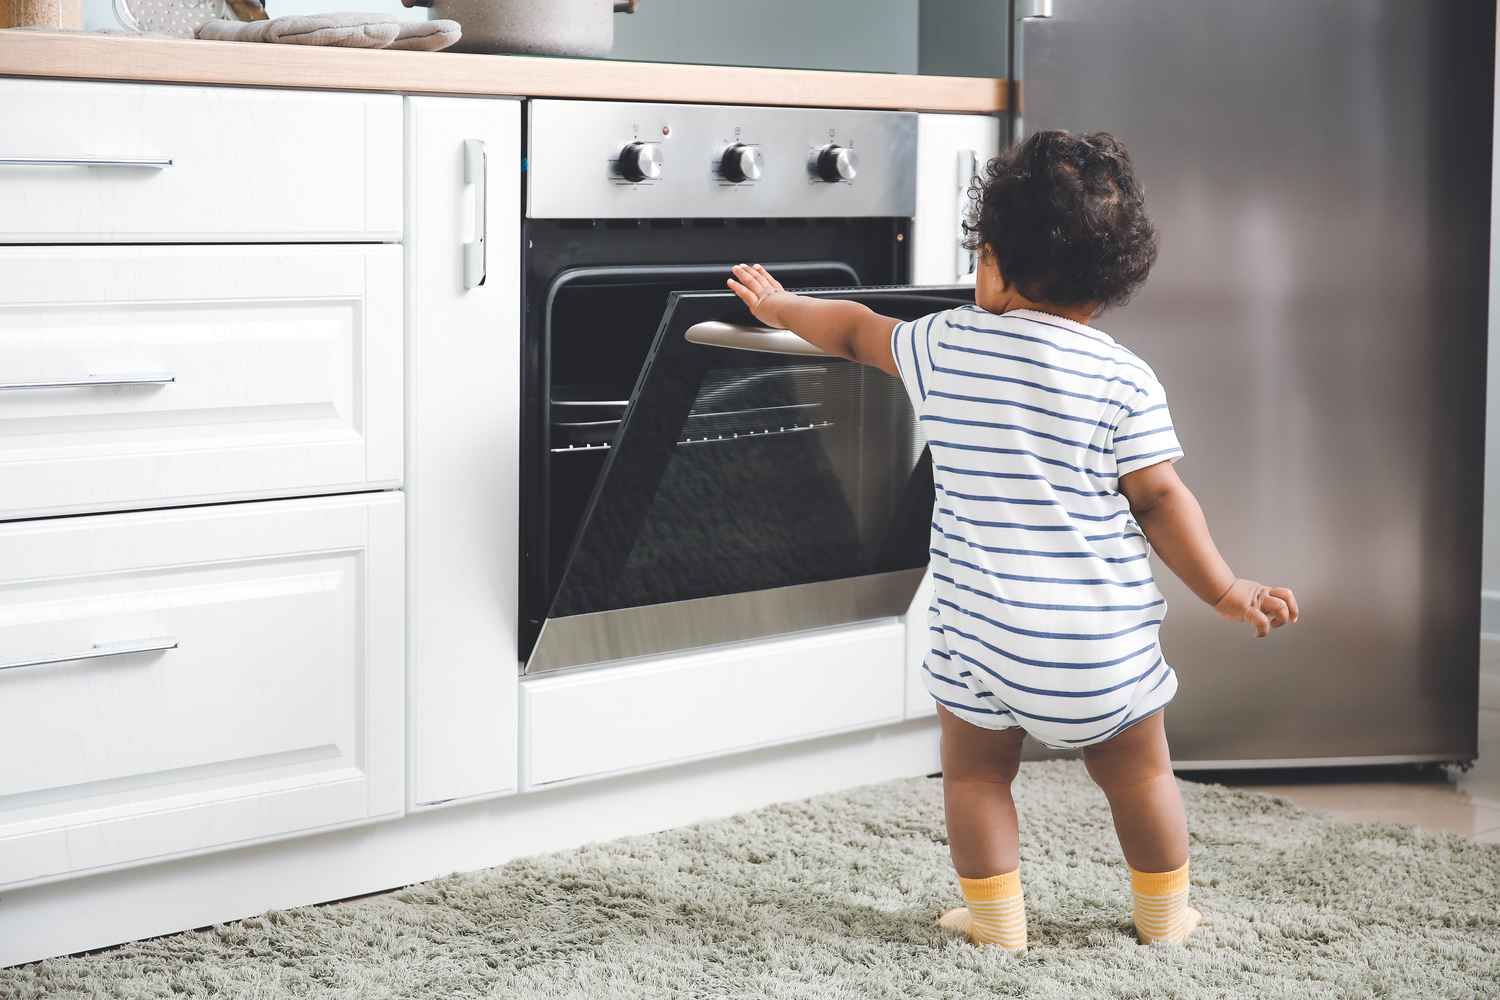 Kitchen Safety for kids